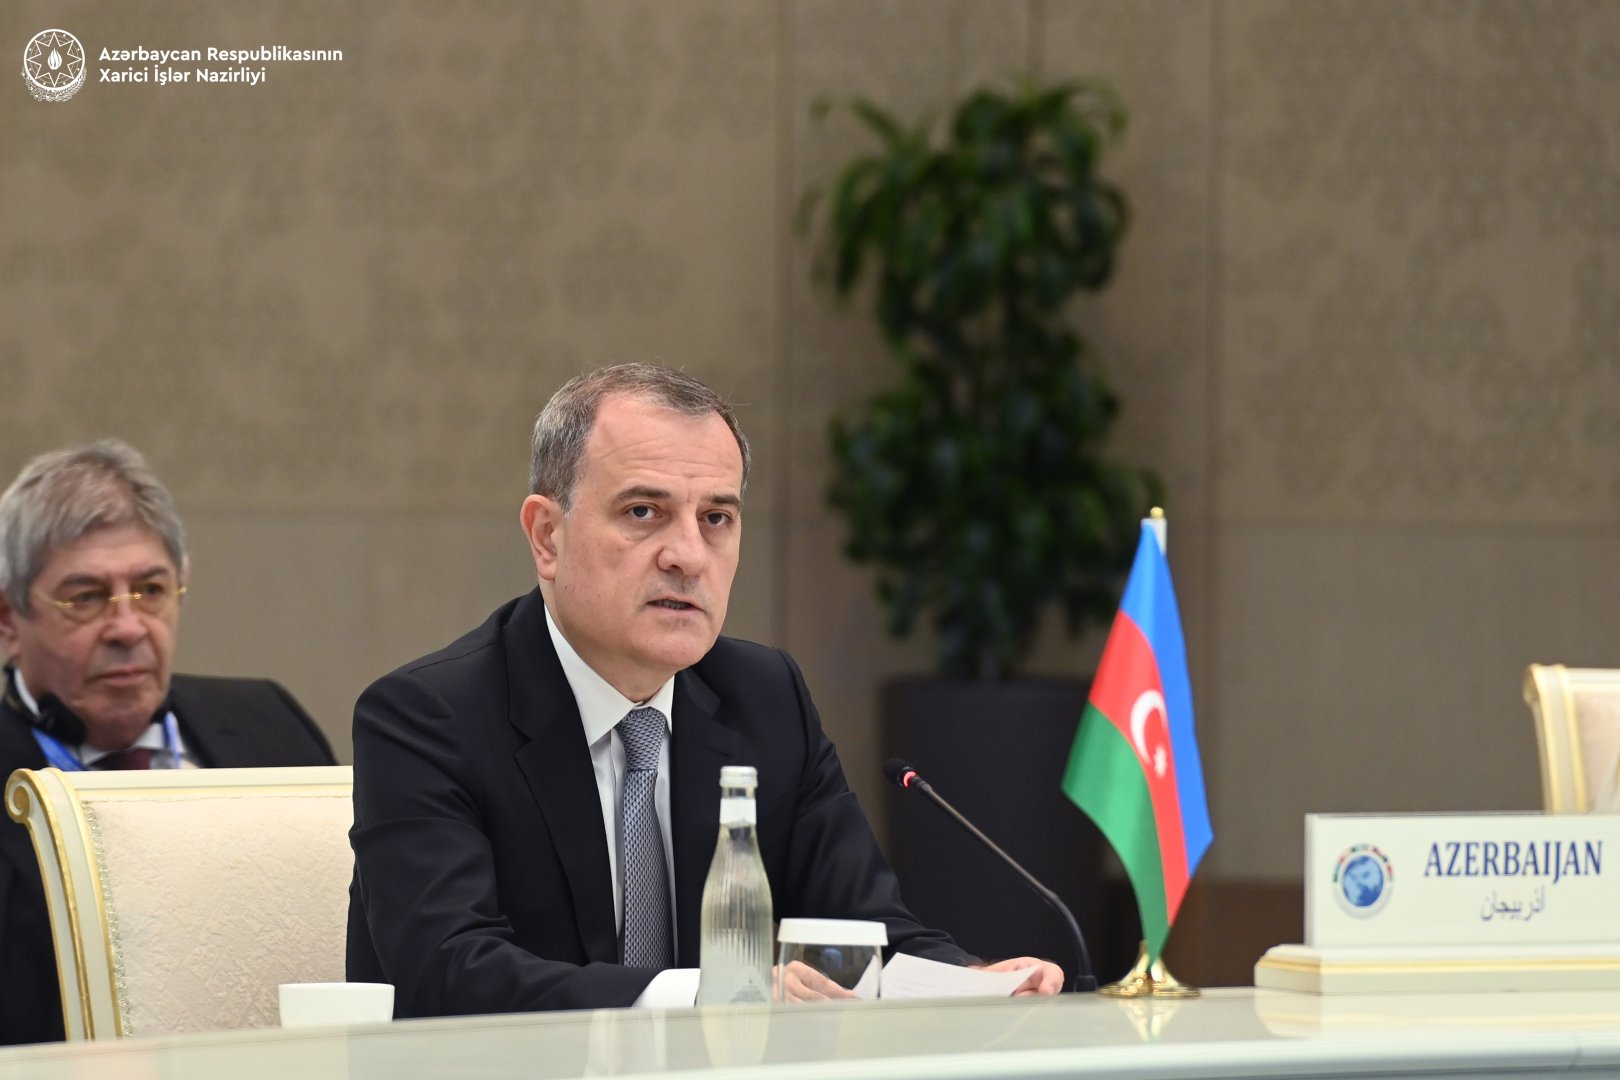 Armenia needs to reciprocate Azerbaijan's peace efforts - FM